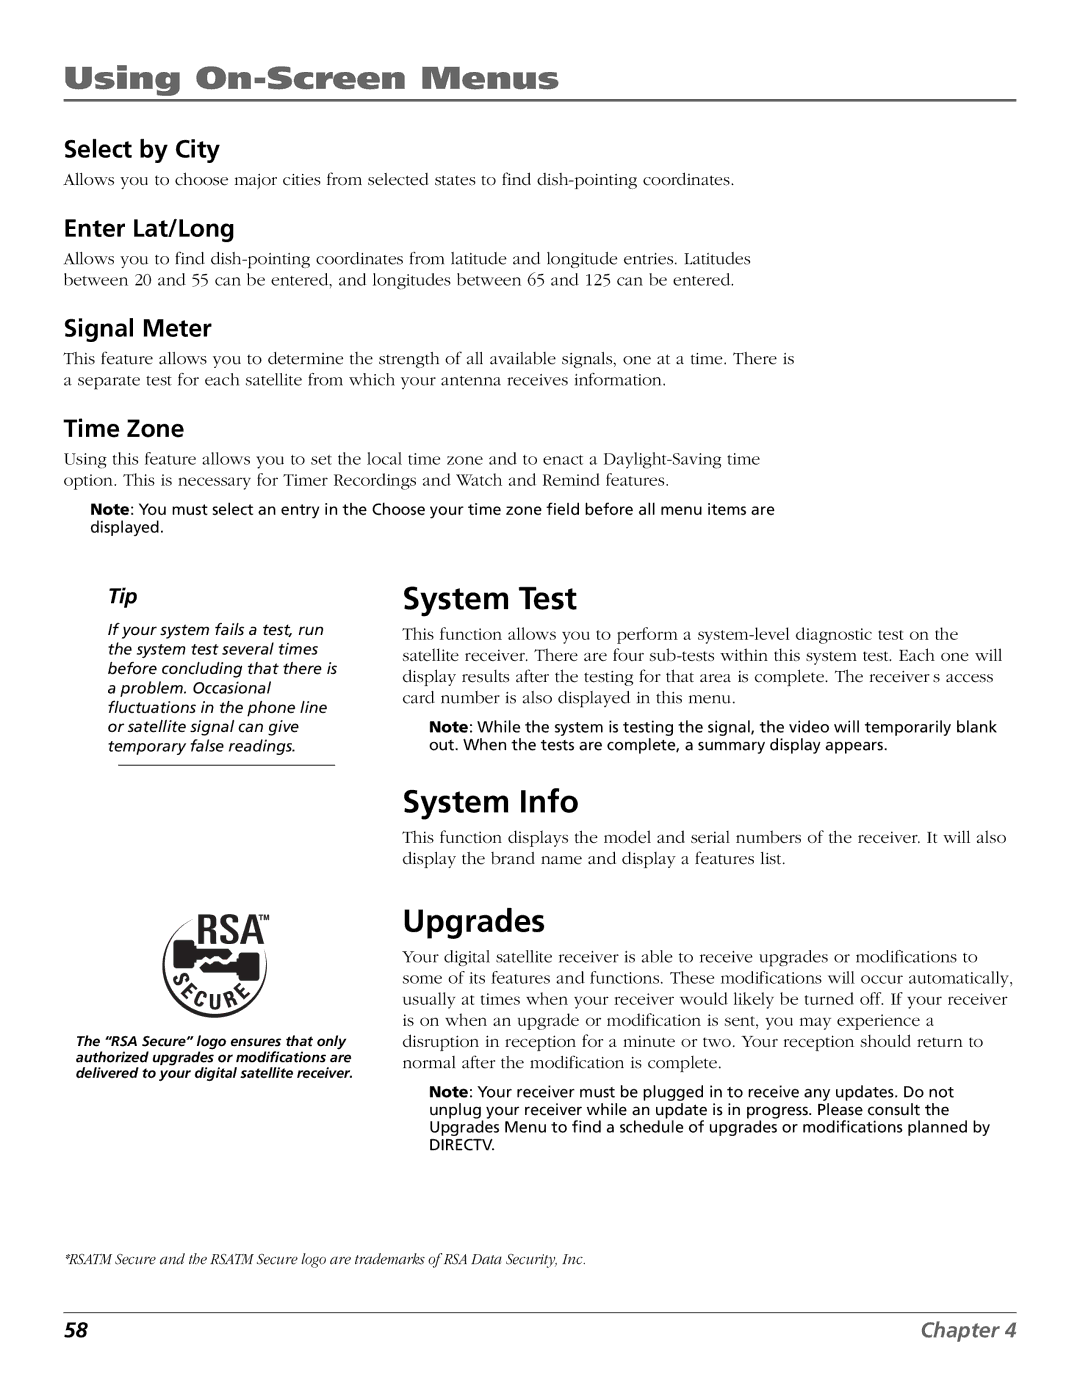 RCA Satellite TV System manual System Test, System Info, Upgrades 